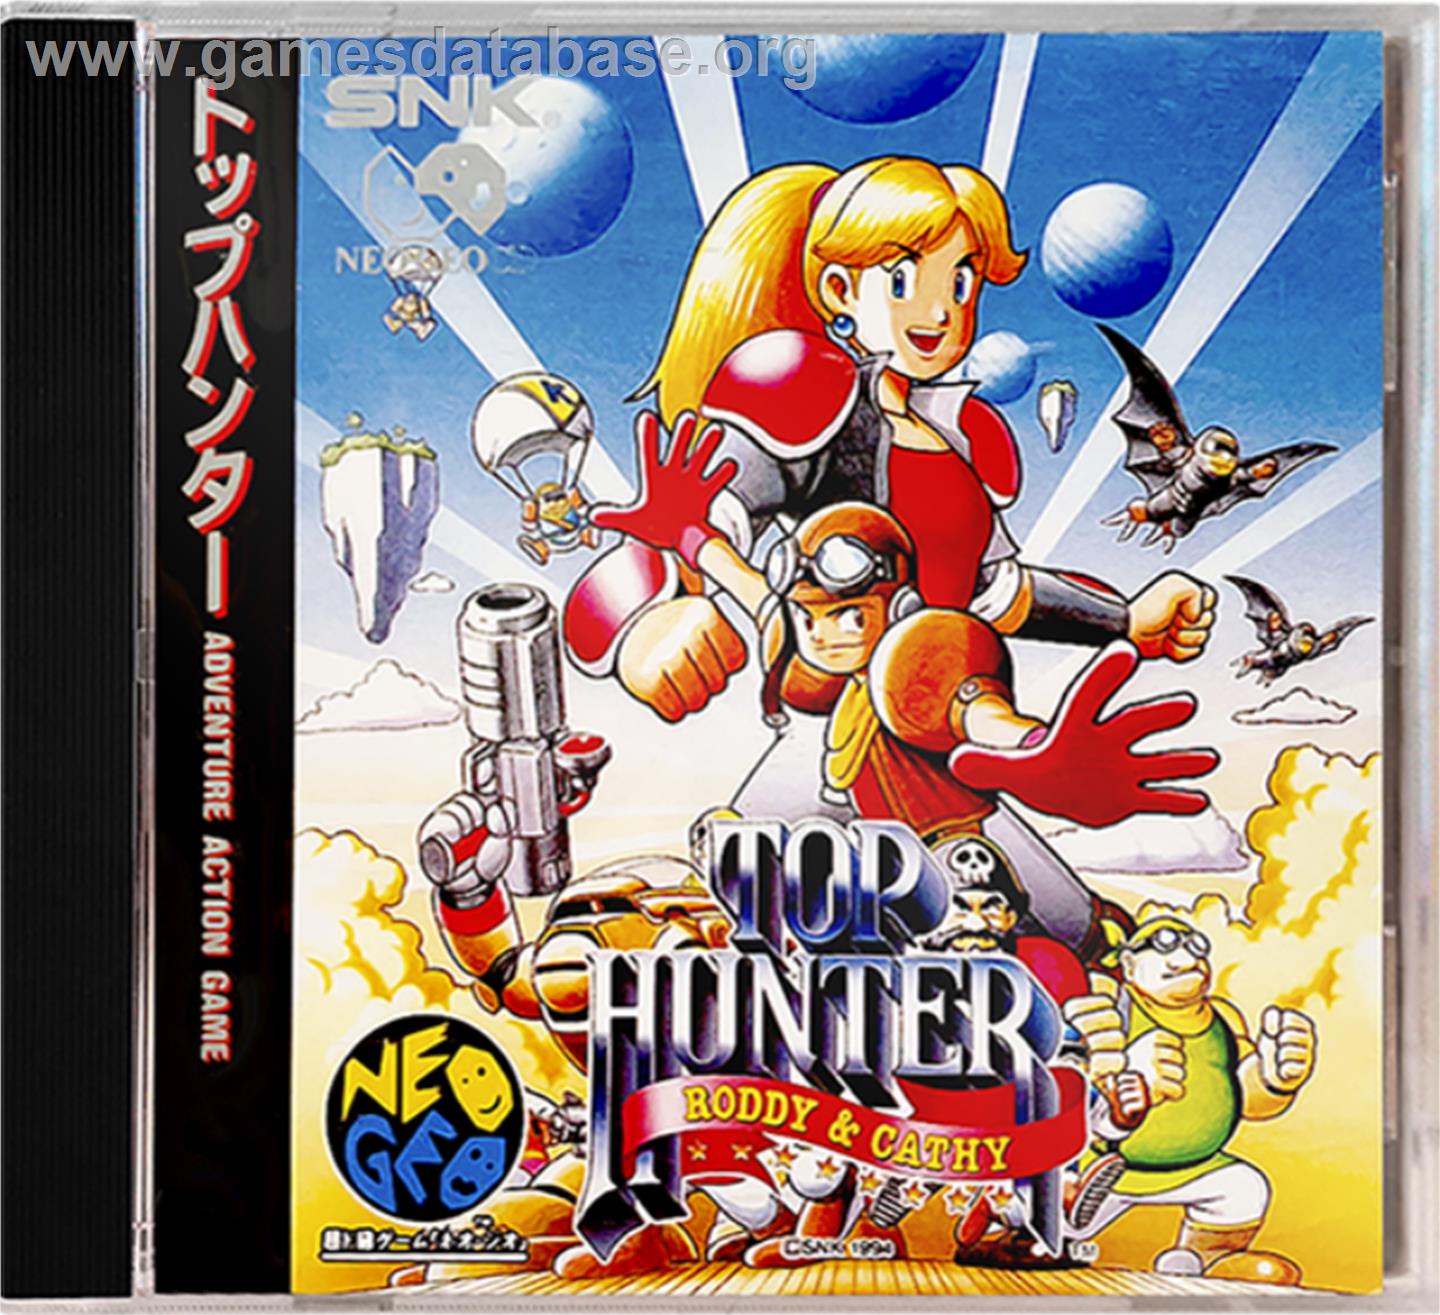 Top Hunter: Roddy & Cathy - SNK Neo-Geo CD - Artwork - Box